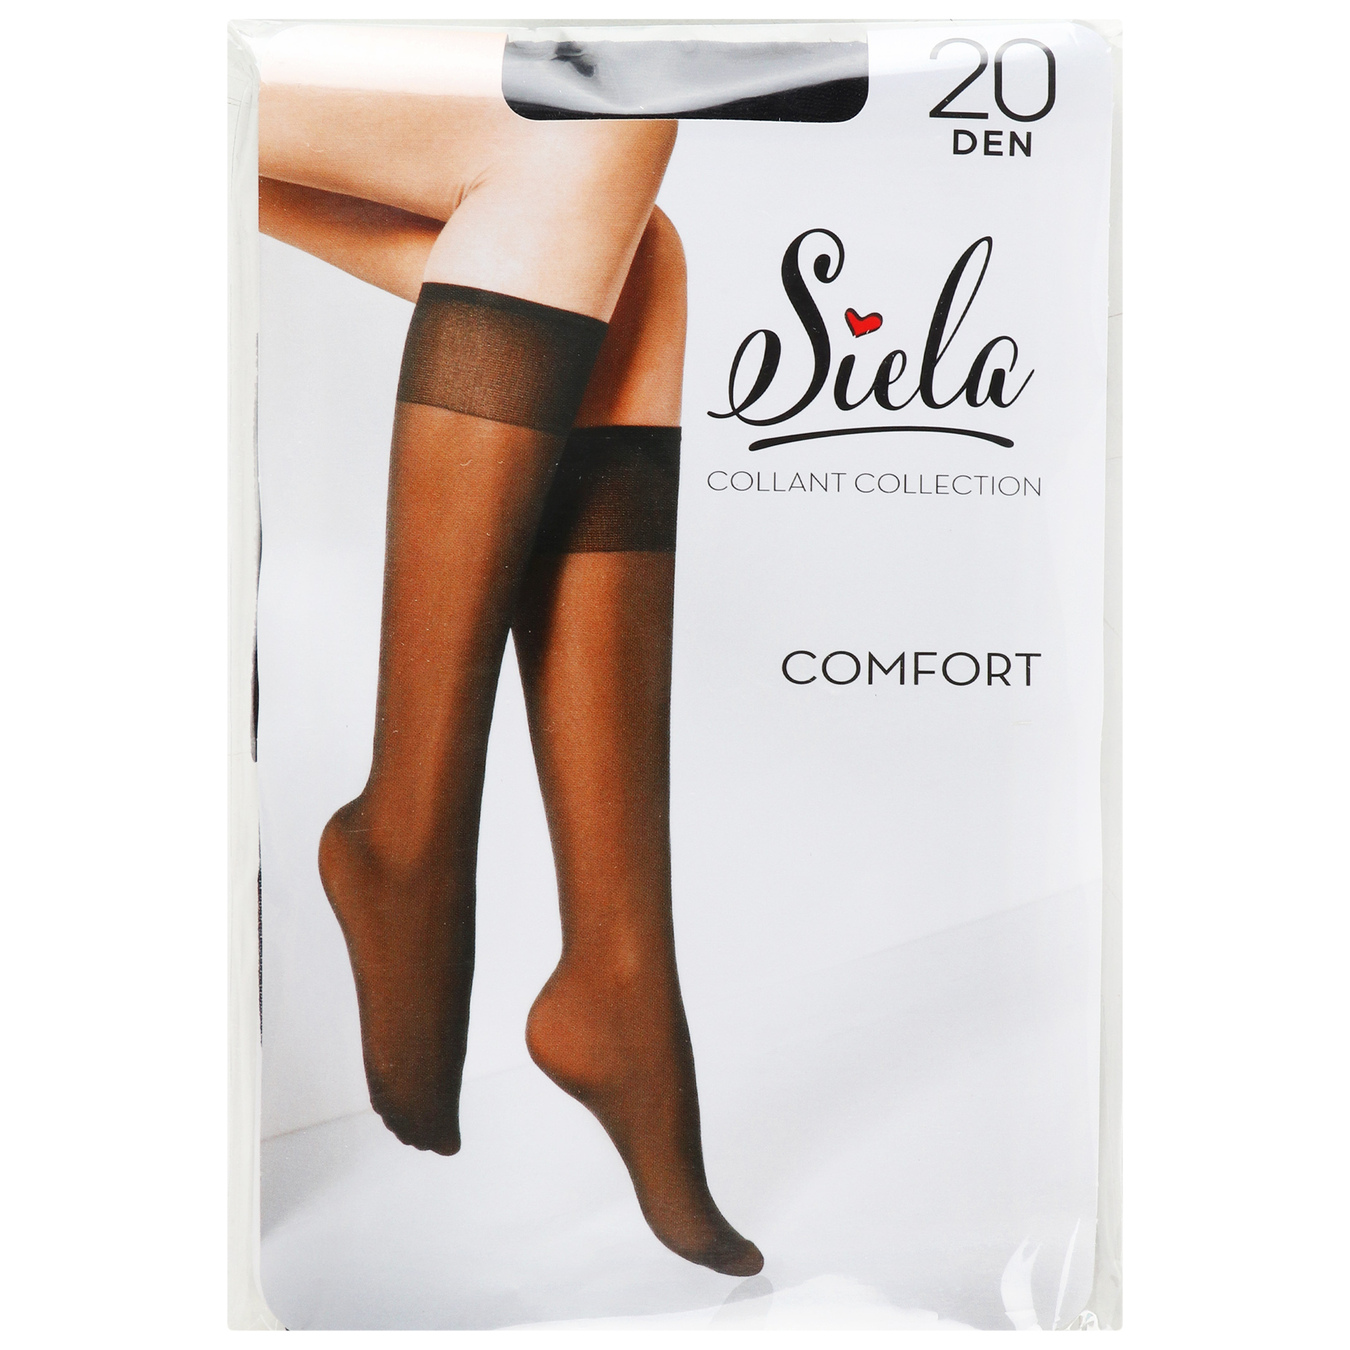 Women's golf shoes Siela Comfort 20den nero size 36-40